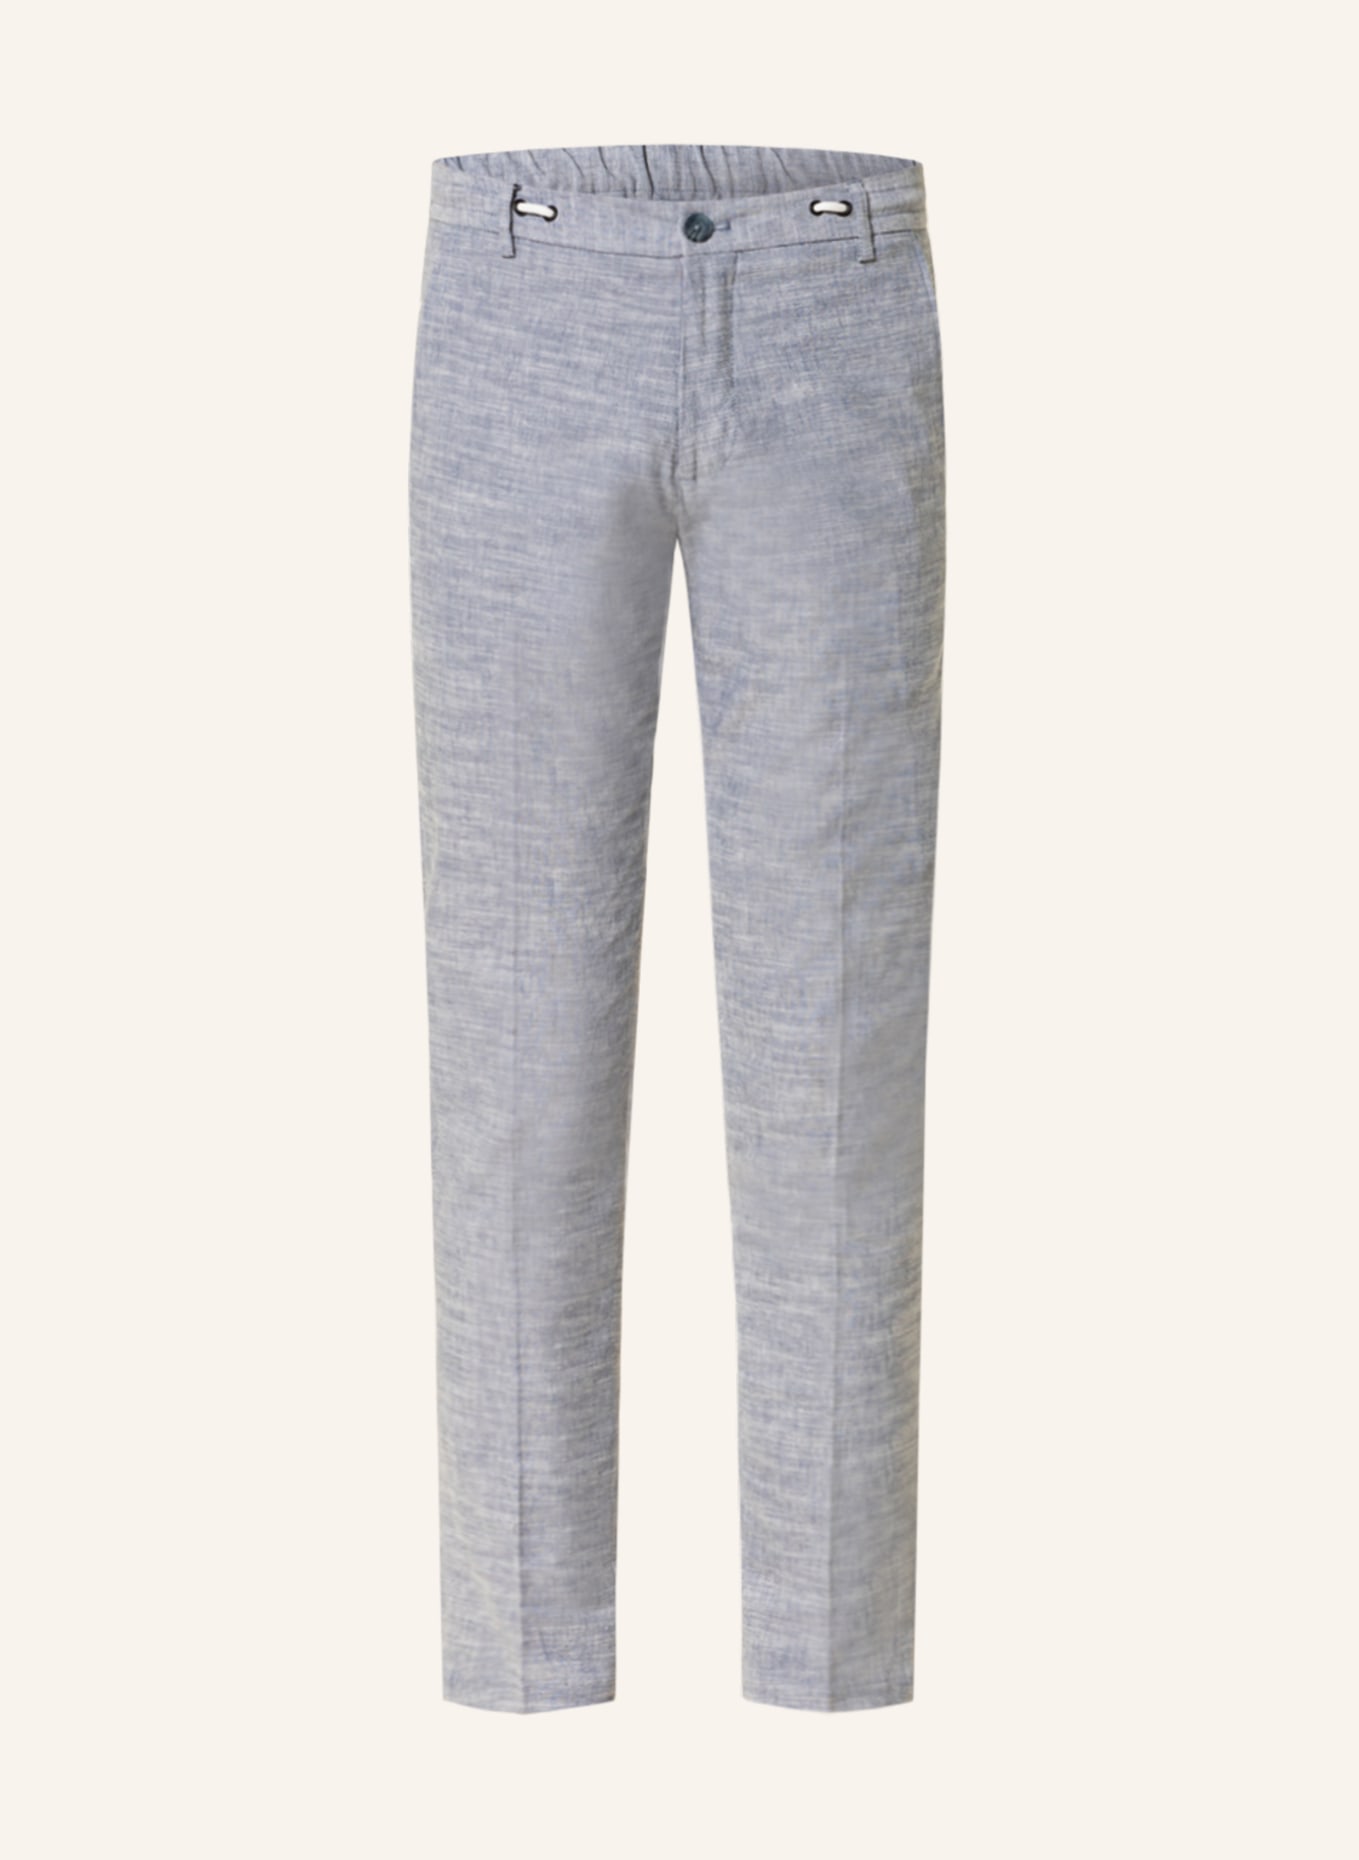 PAUL Anzughose Extra Slim Fit mit Leinen, Farbe: 001 Light Blue (Bild 1)